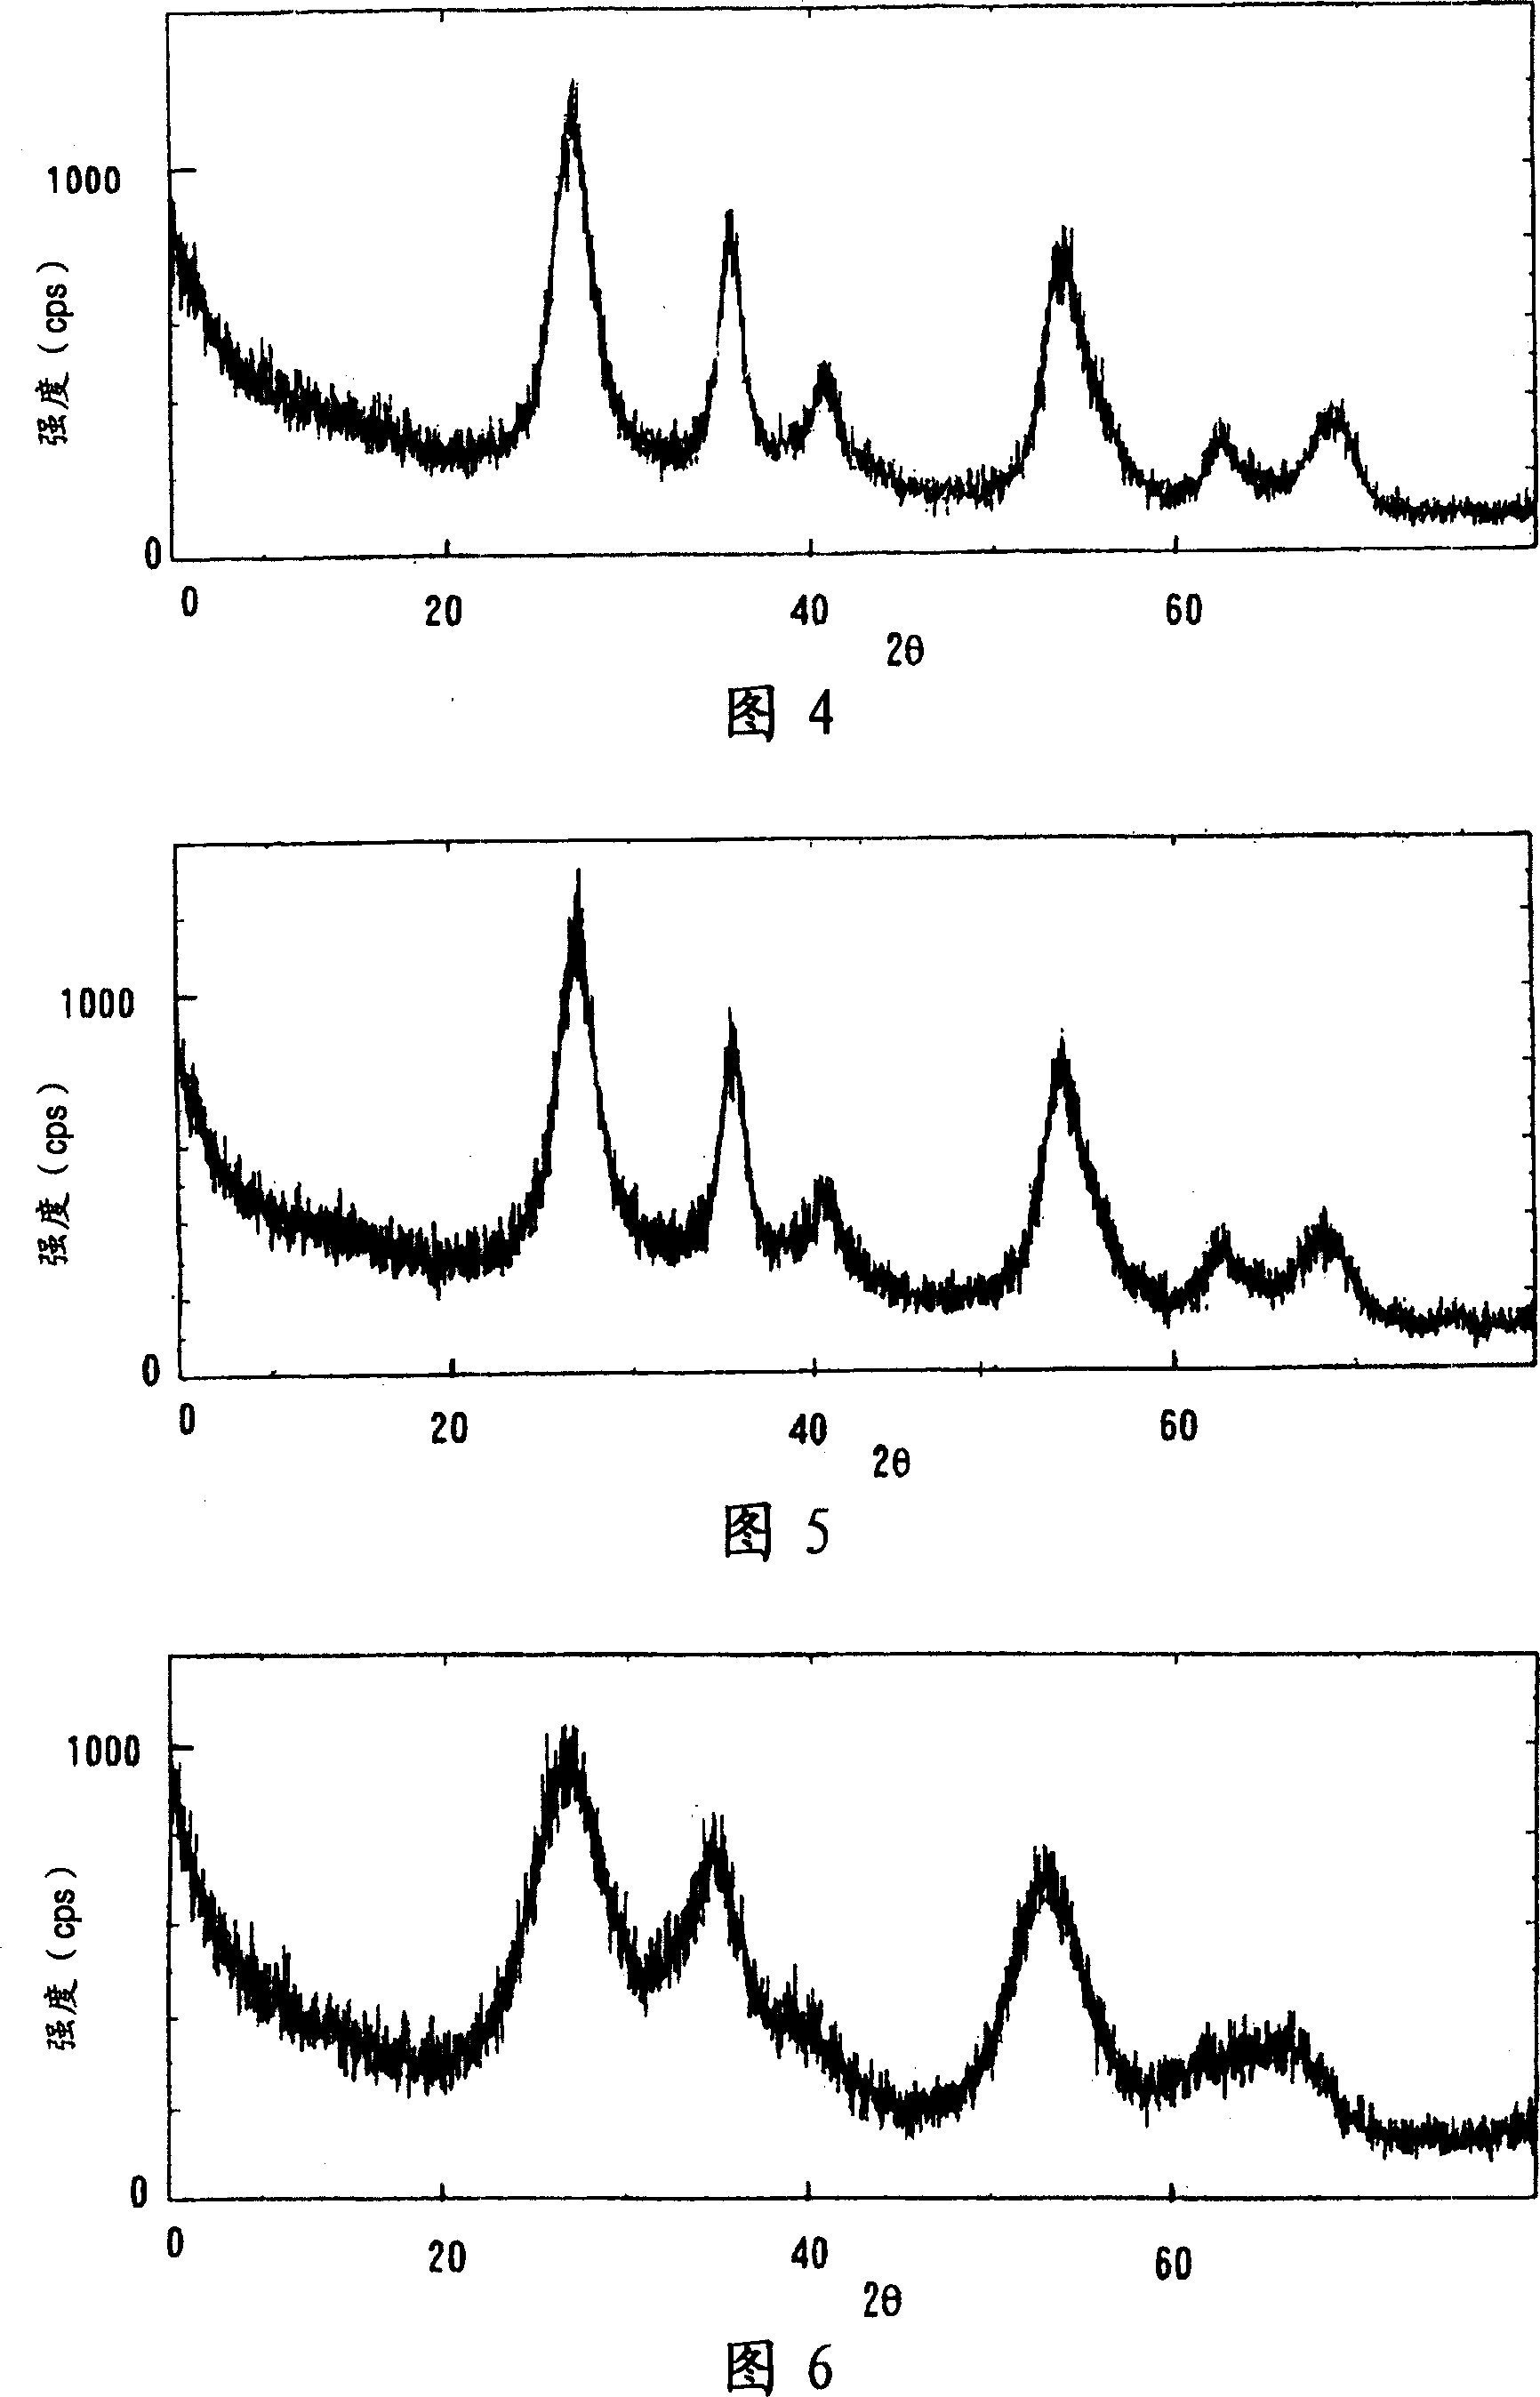 Fine particles of tin-modified rutile-type titanium dioxide